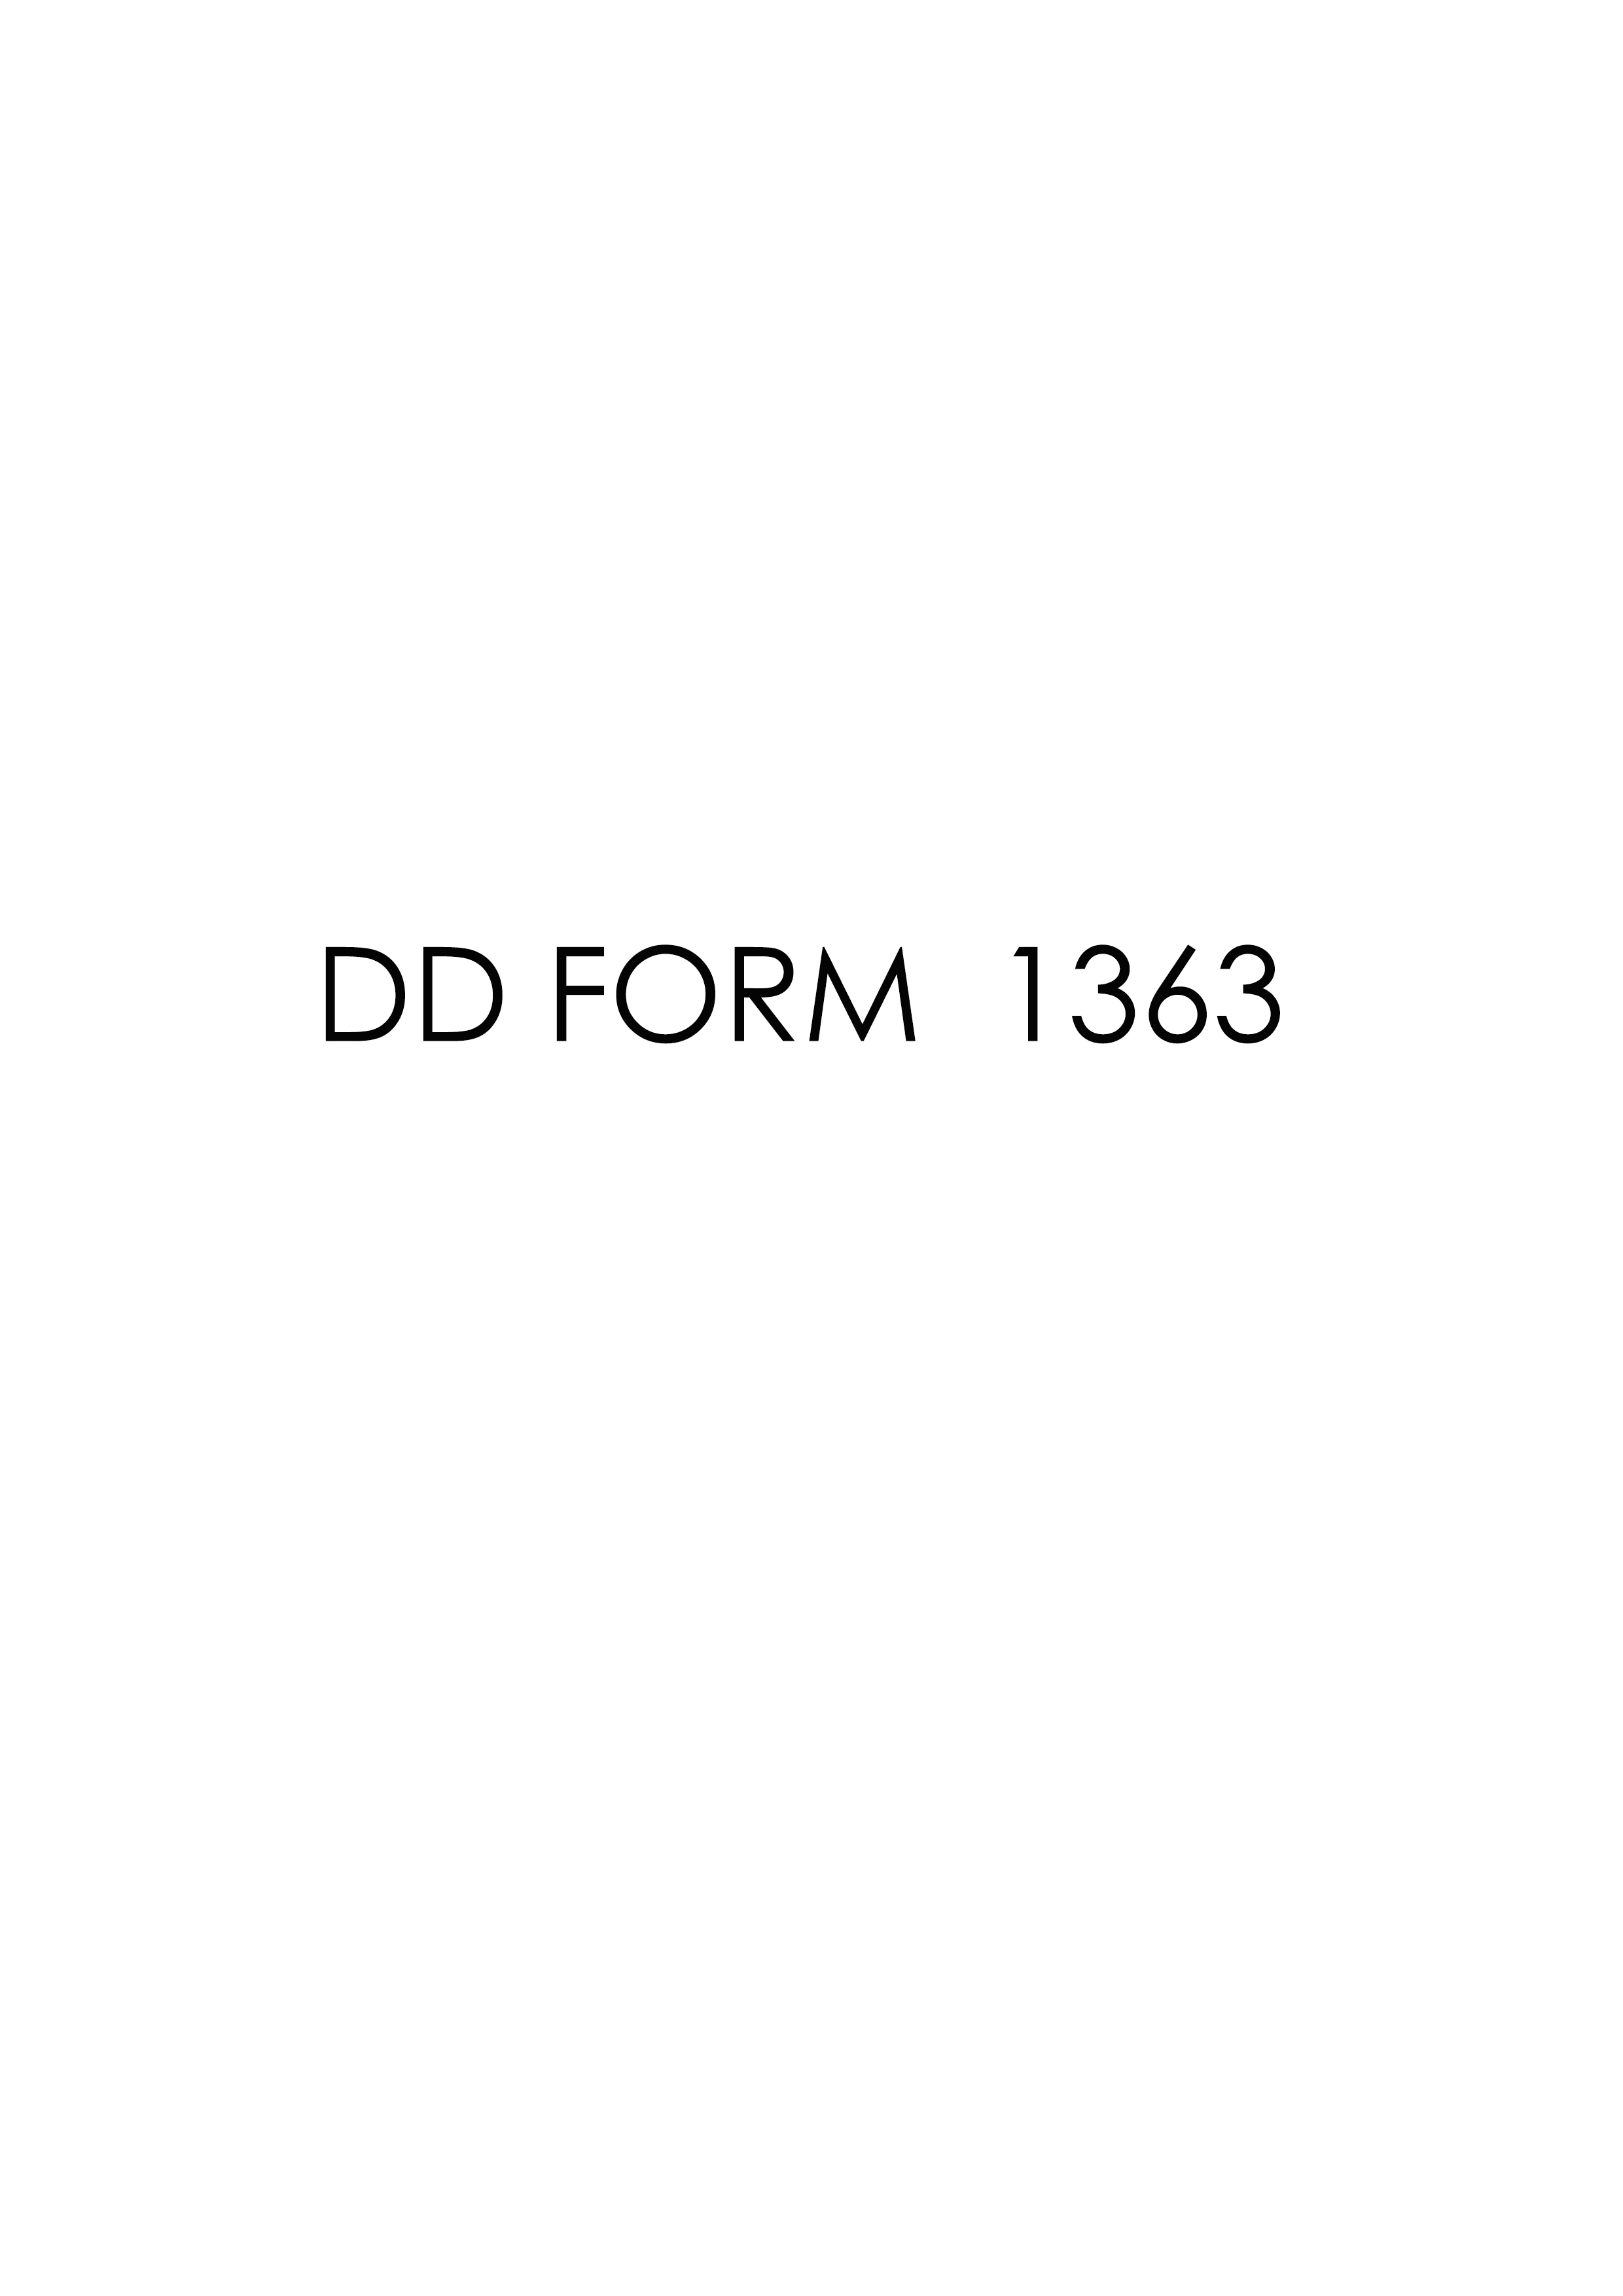 Download dd Form 1363